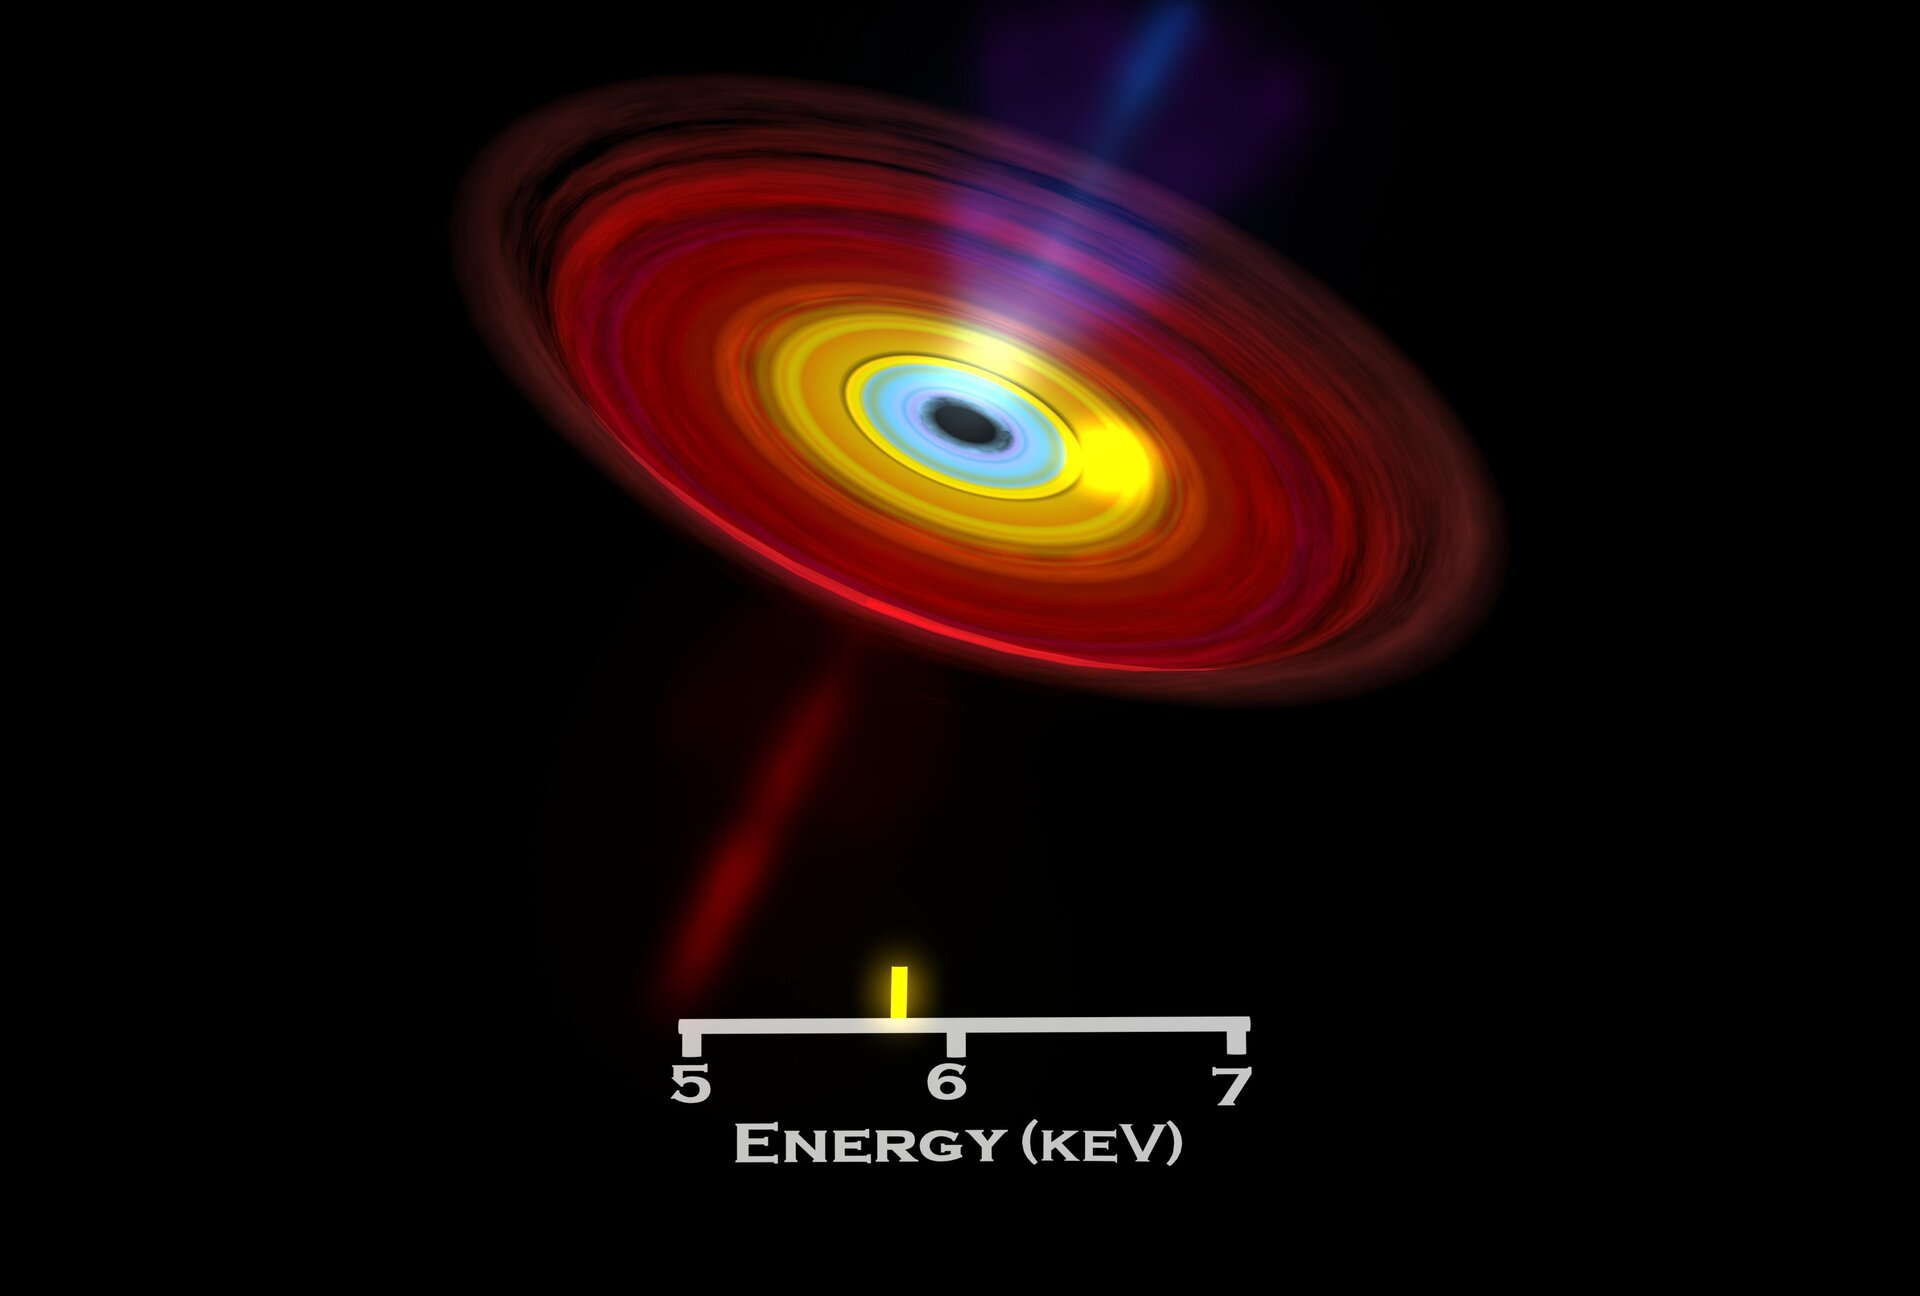 ESA’s XMM-Newton sees matter speed-racing around a black hole